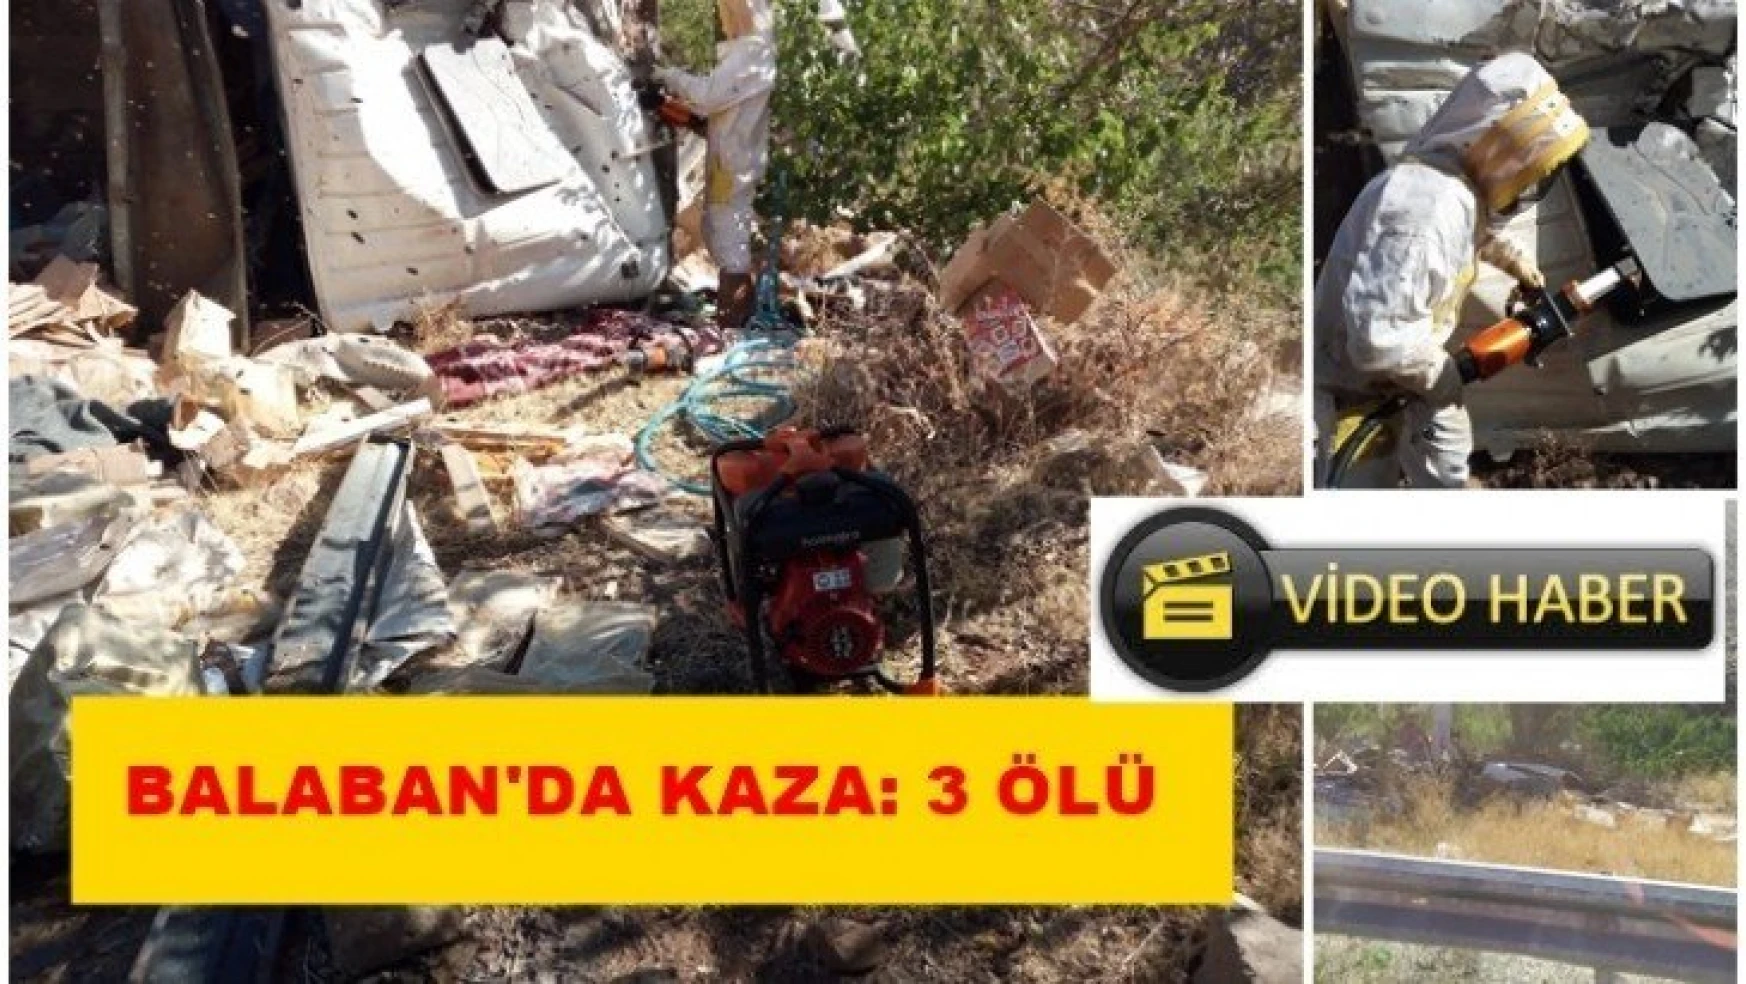 Daren Balaban'da Kaza: 3 Ölü